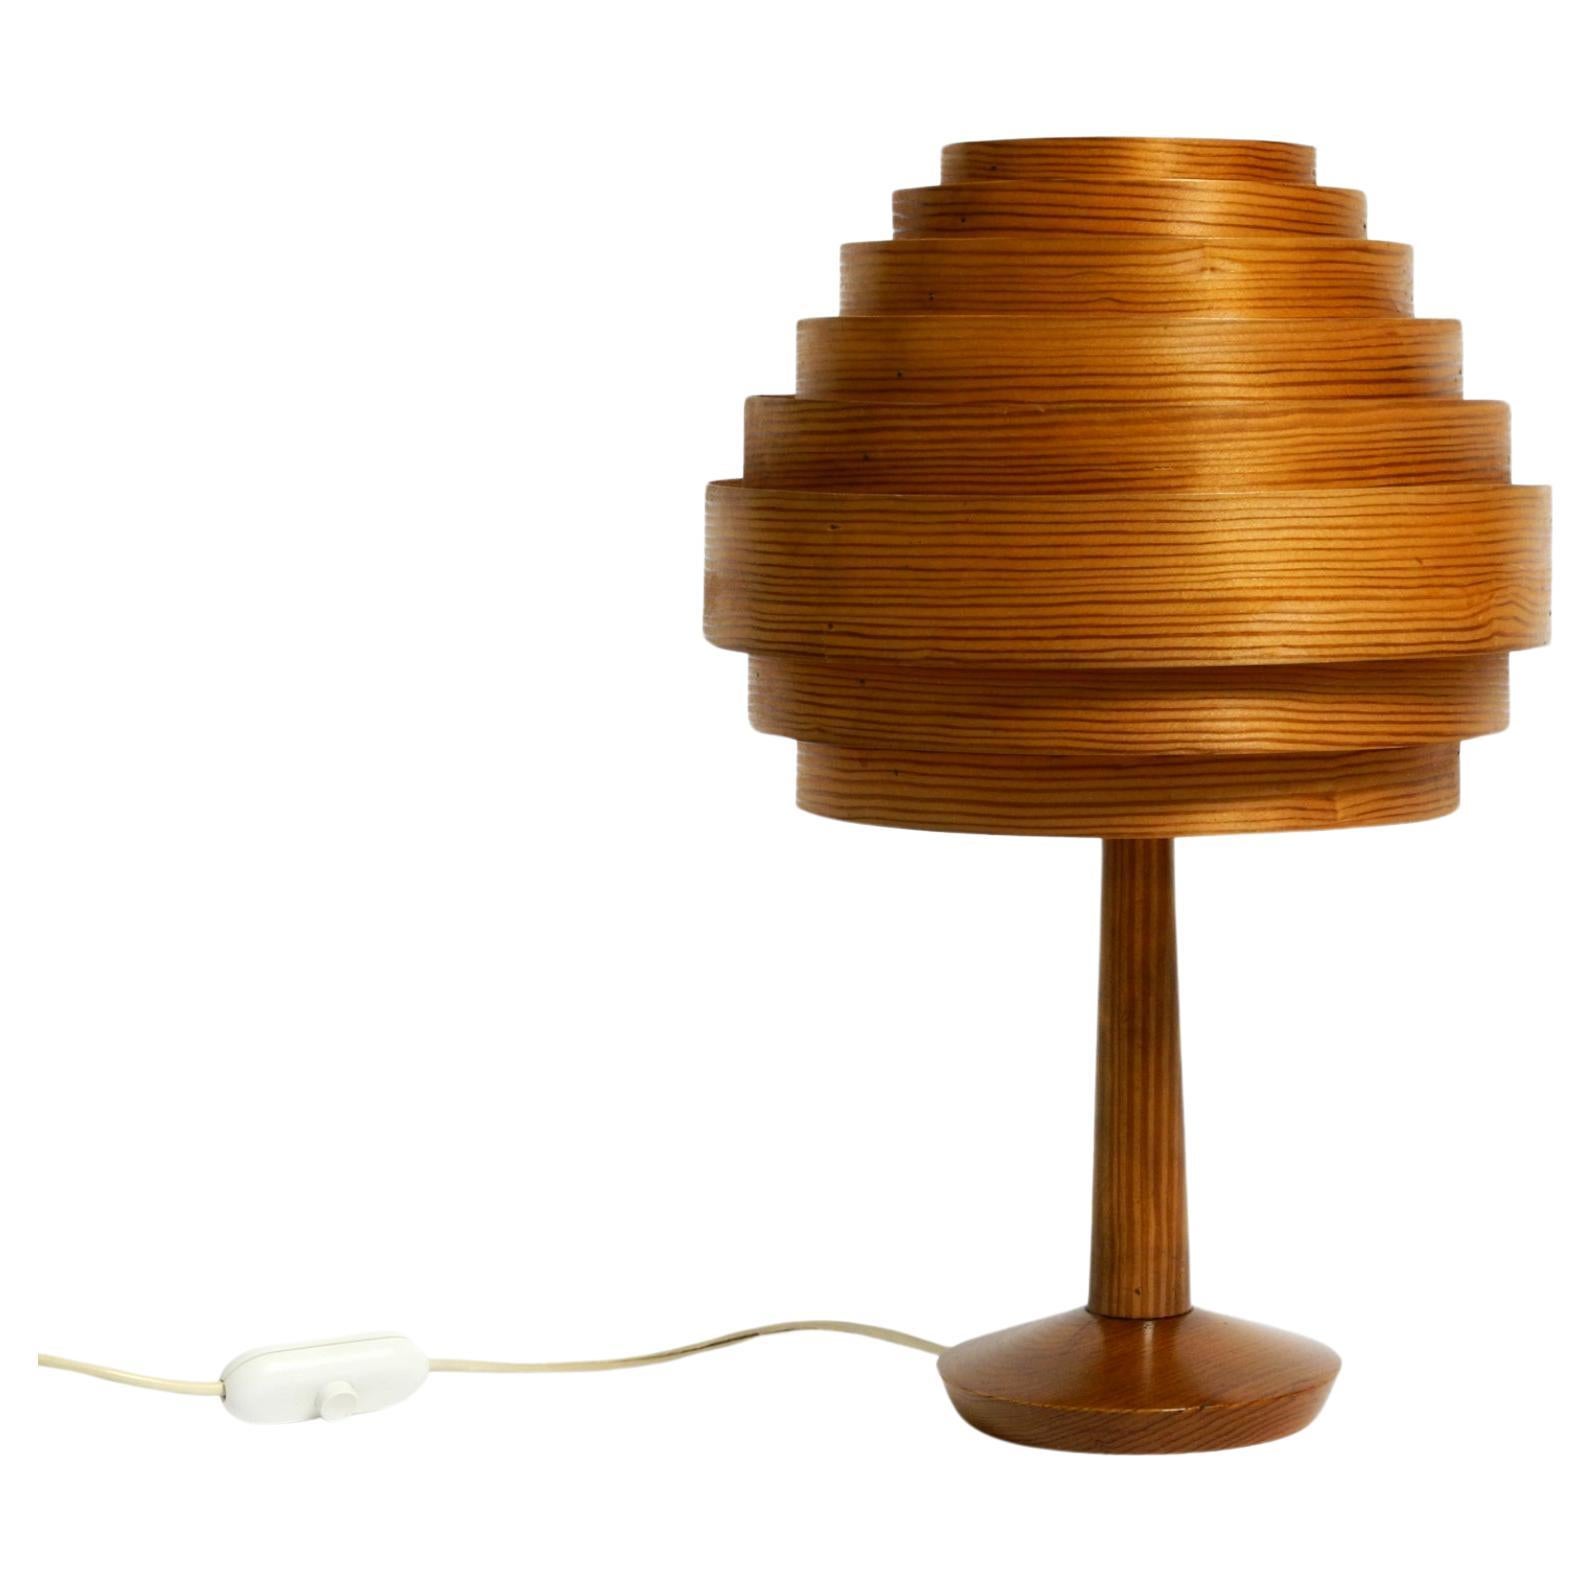 60s pine veneer lamella table lamp by Hans Agne Jakobsson  Markaryd Sweden